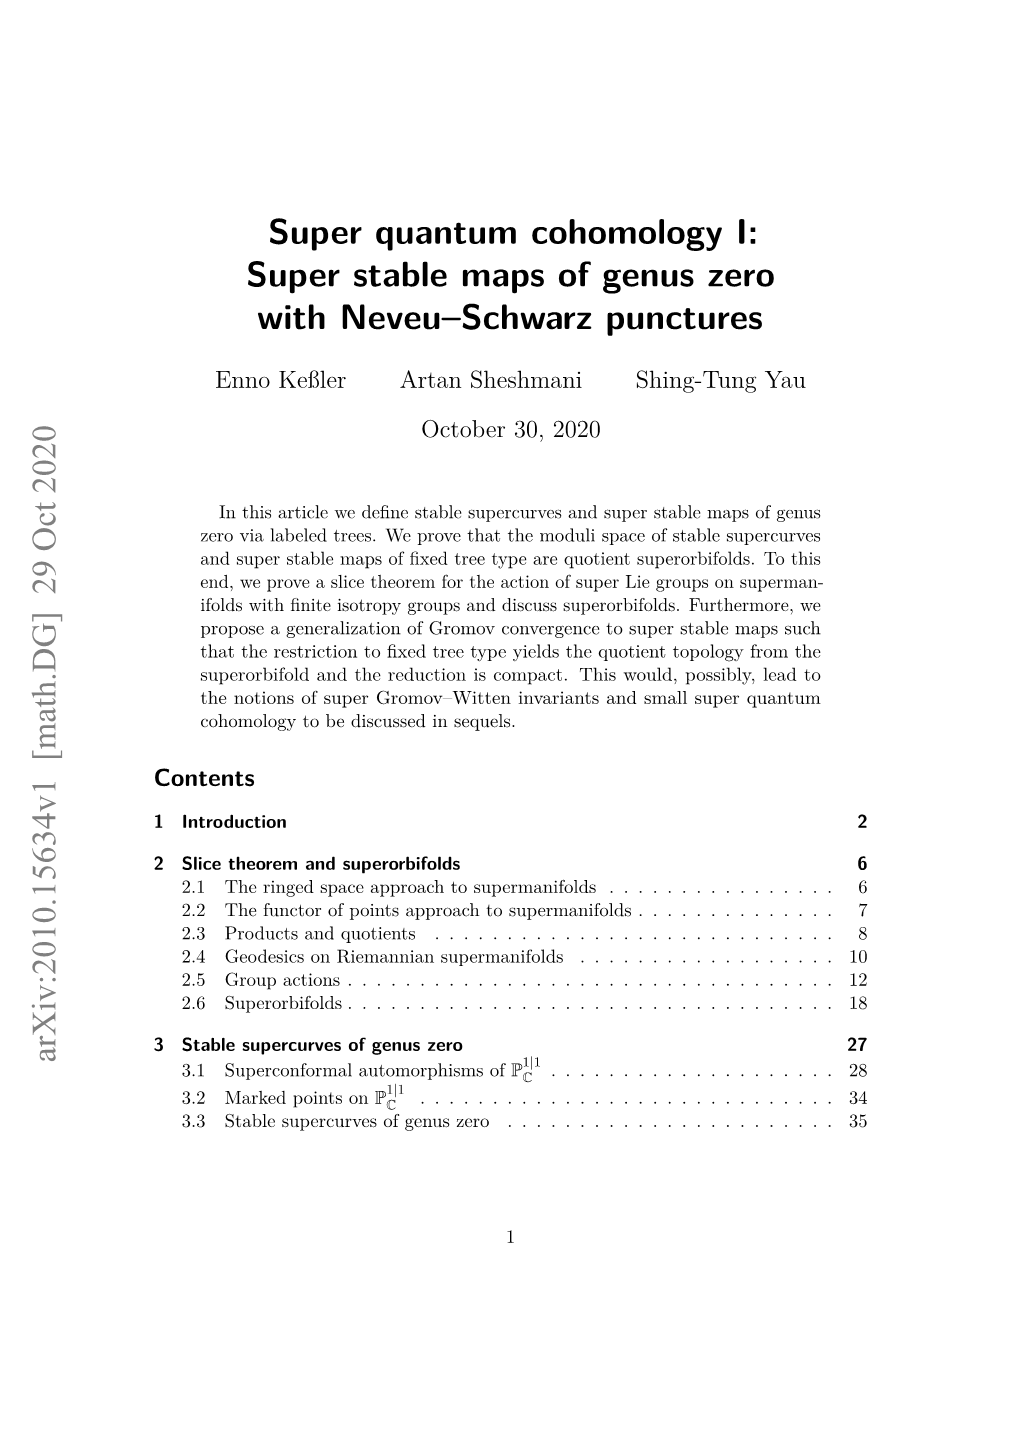 Super Stable Maps of Genus Zero with Neveu–Schwarz Punctures